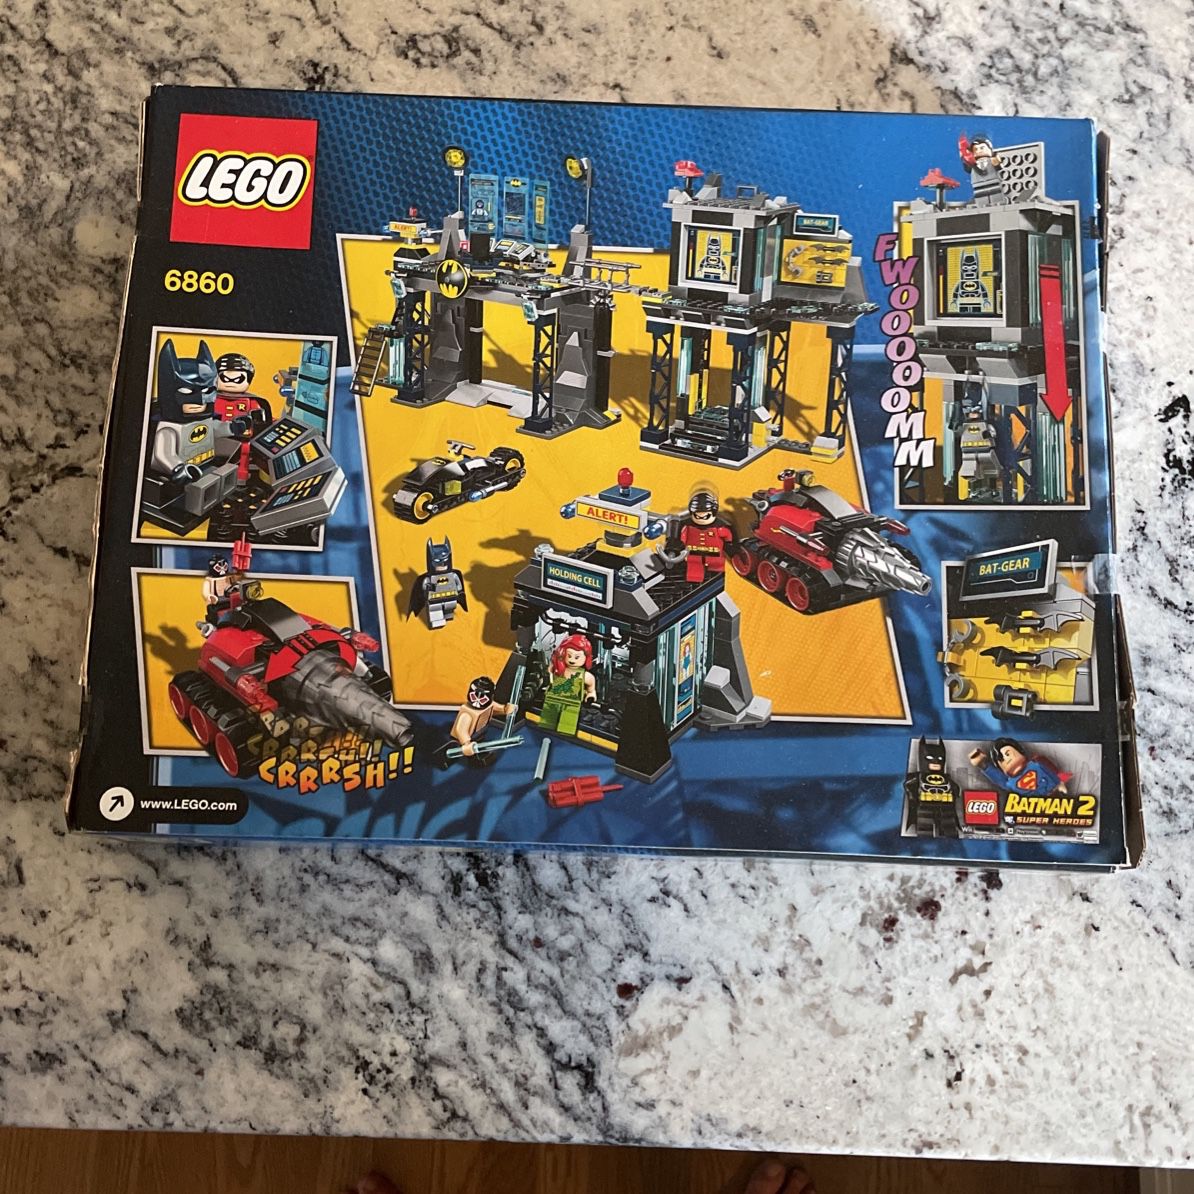 Batman Lego Series 6860 for Sale in Naperville, IL - OfferUp